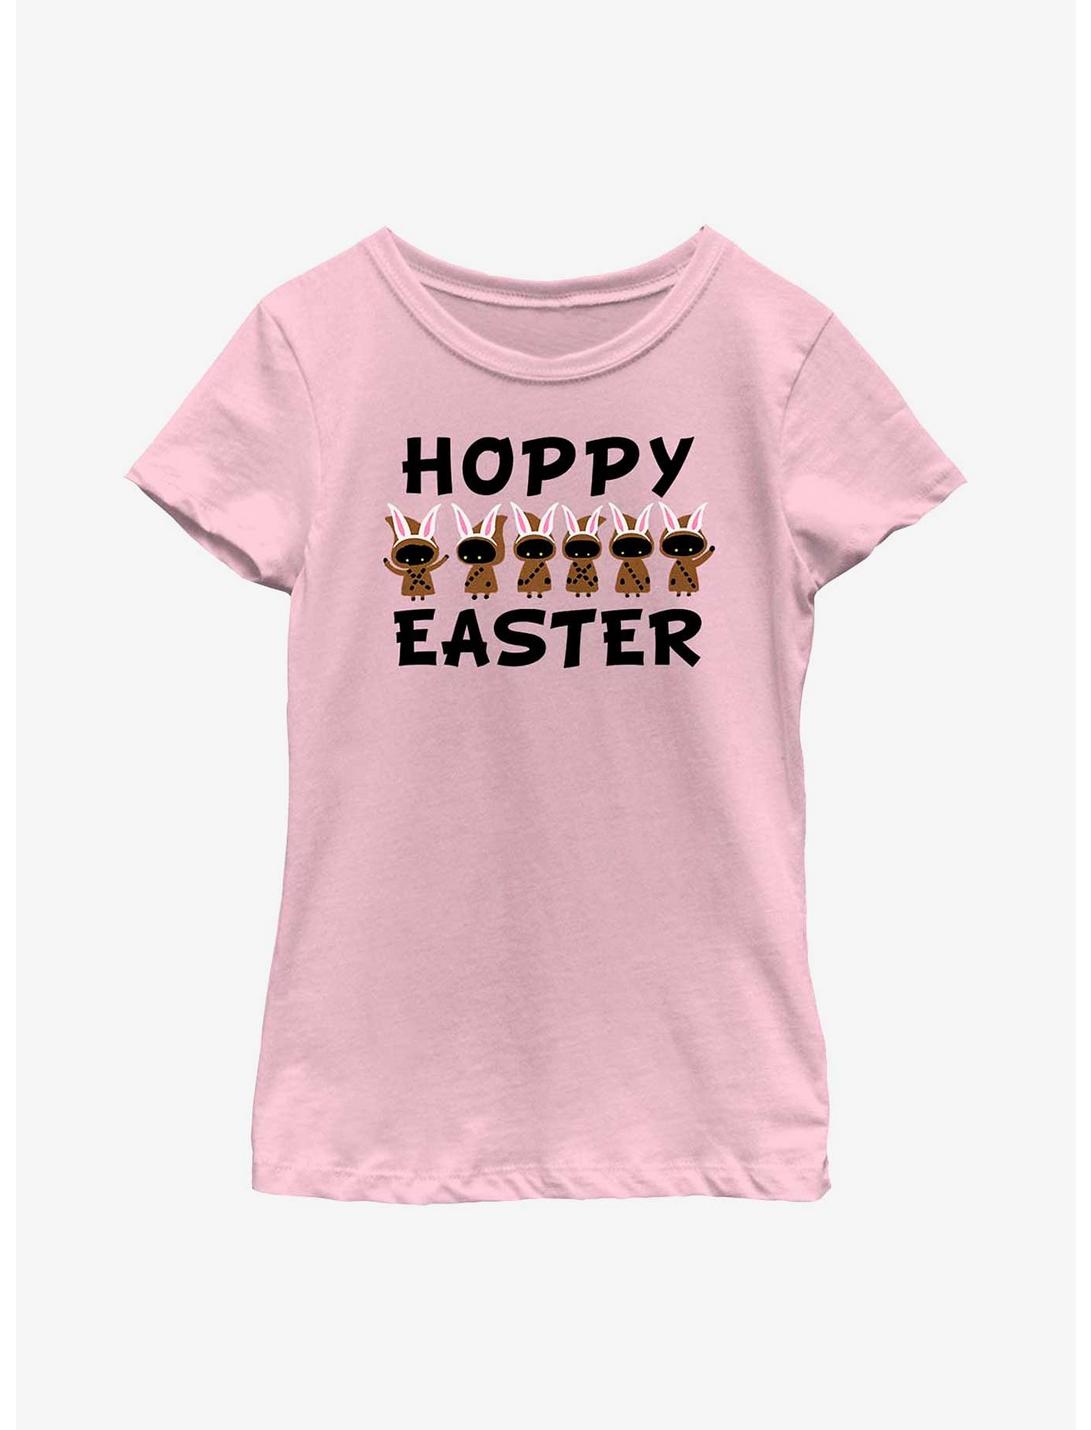 Star Wars Jawas Hoppy Easter Youth Girls T-Shirt, PINK, hi-res